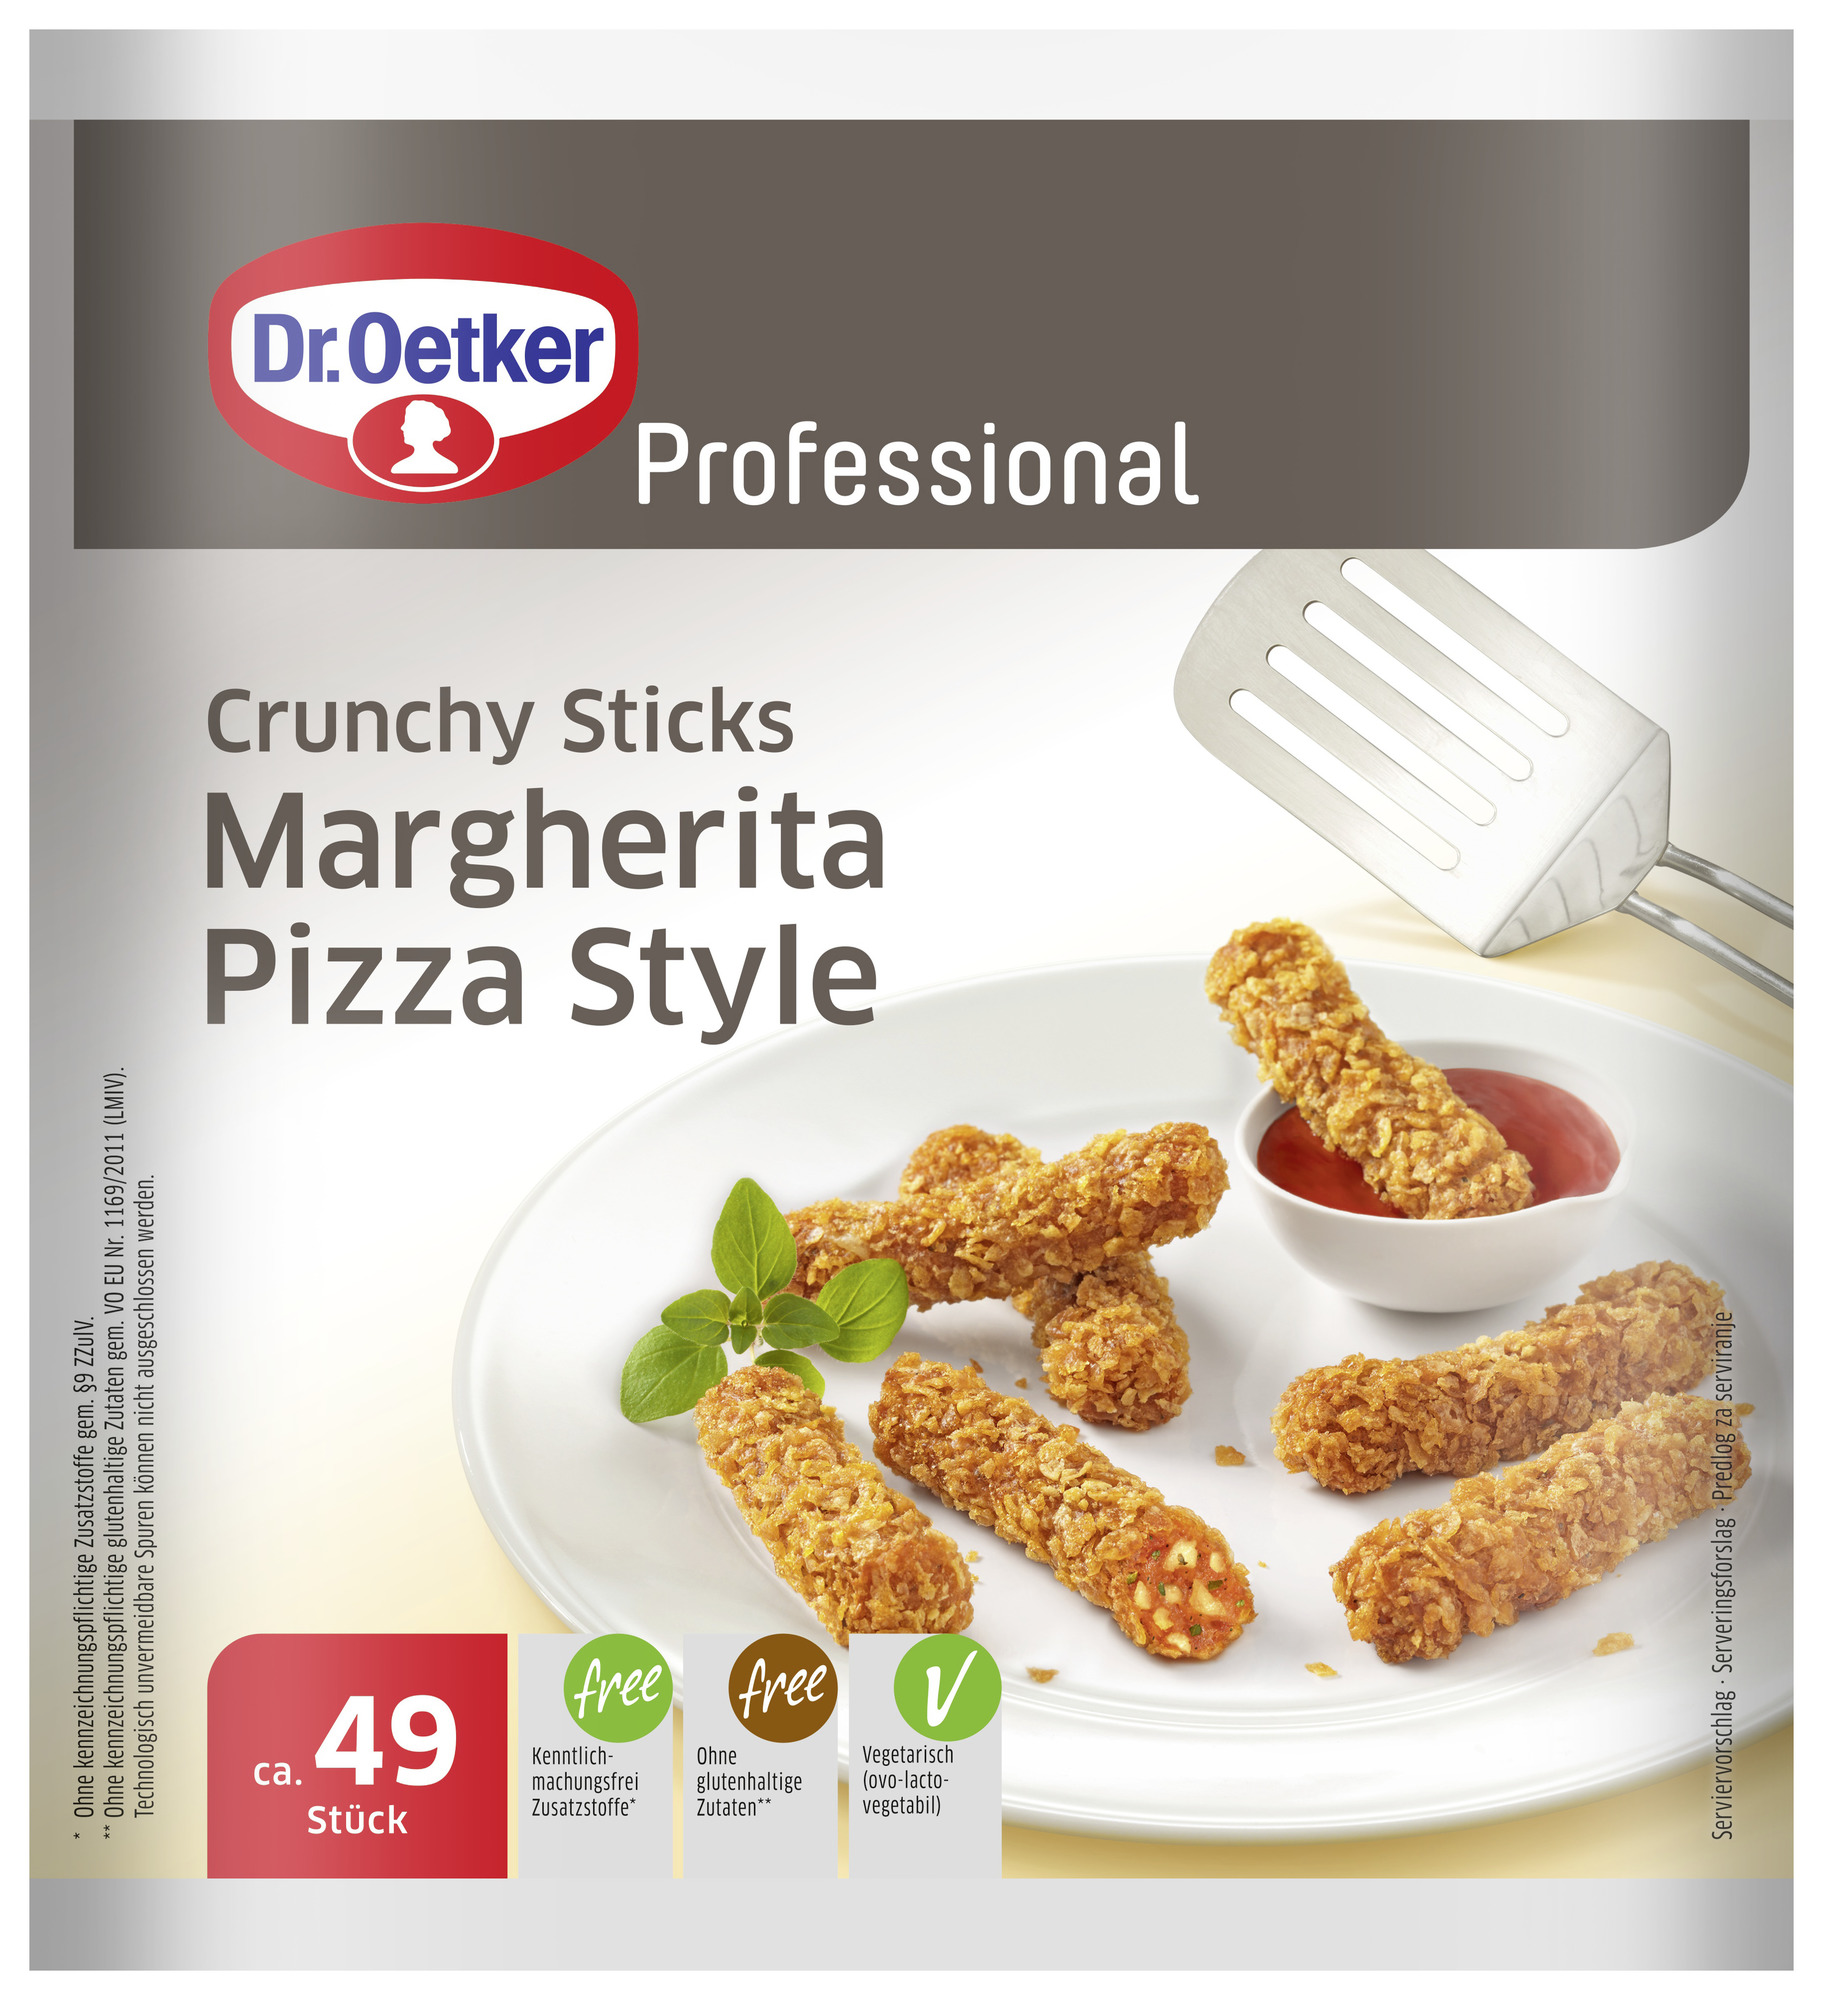 Crunchy Sticks Margherita Pizza Style ca. 20g